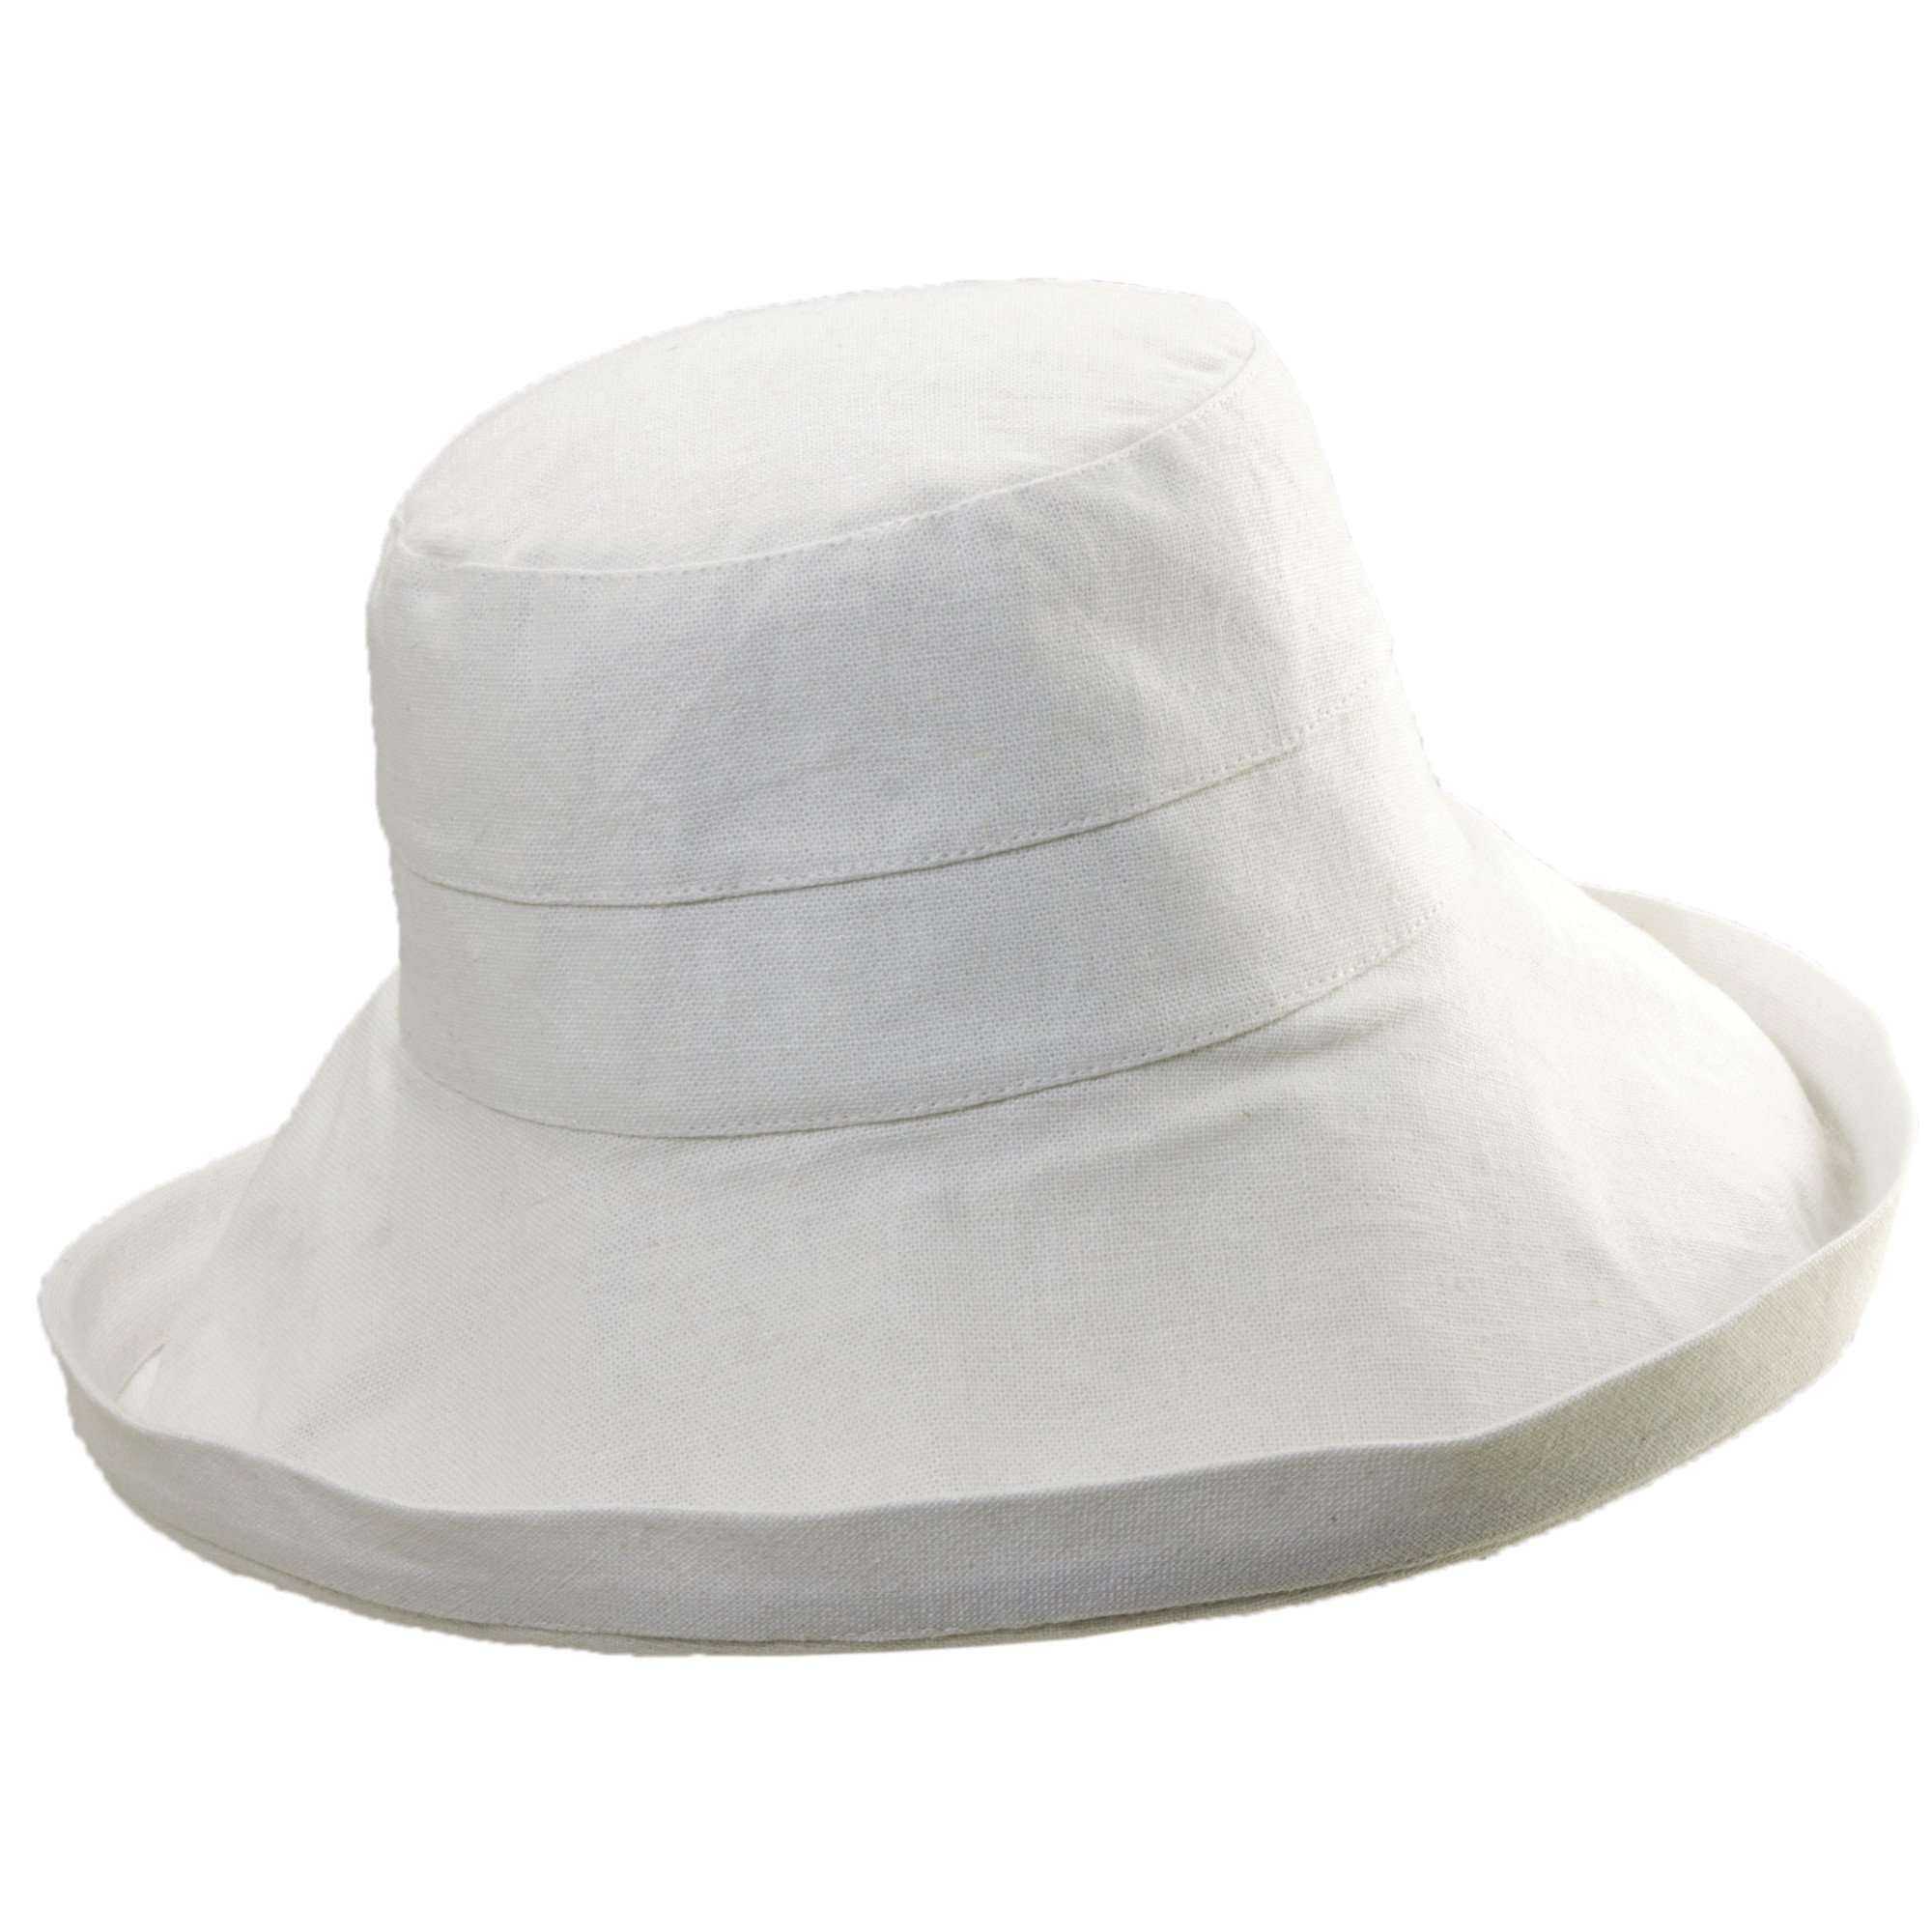 Up Turned Brim Linen Sun Hat in Neutral Colors - Tropical Trends Kettle Brim Hat Dorfman Hat Co. lc635WH White  